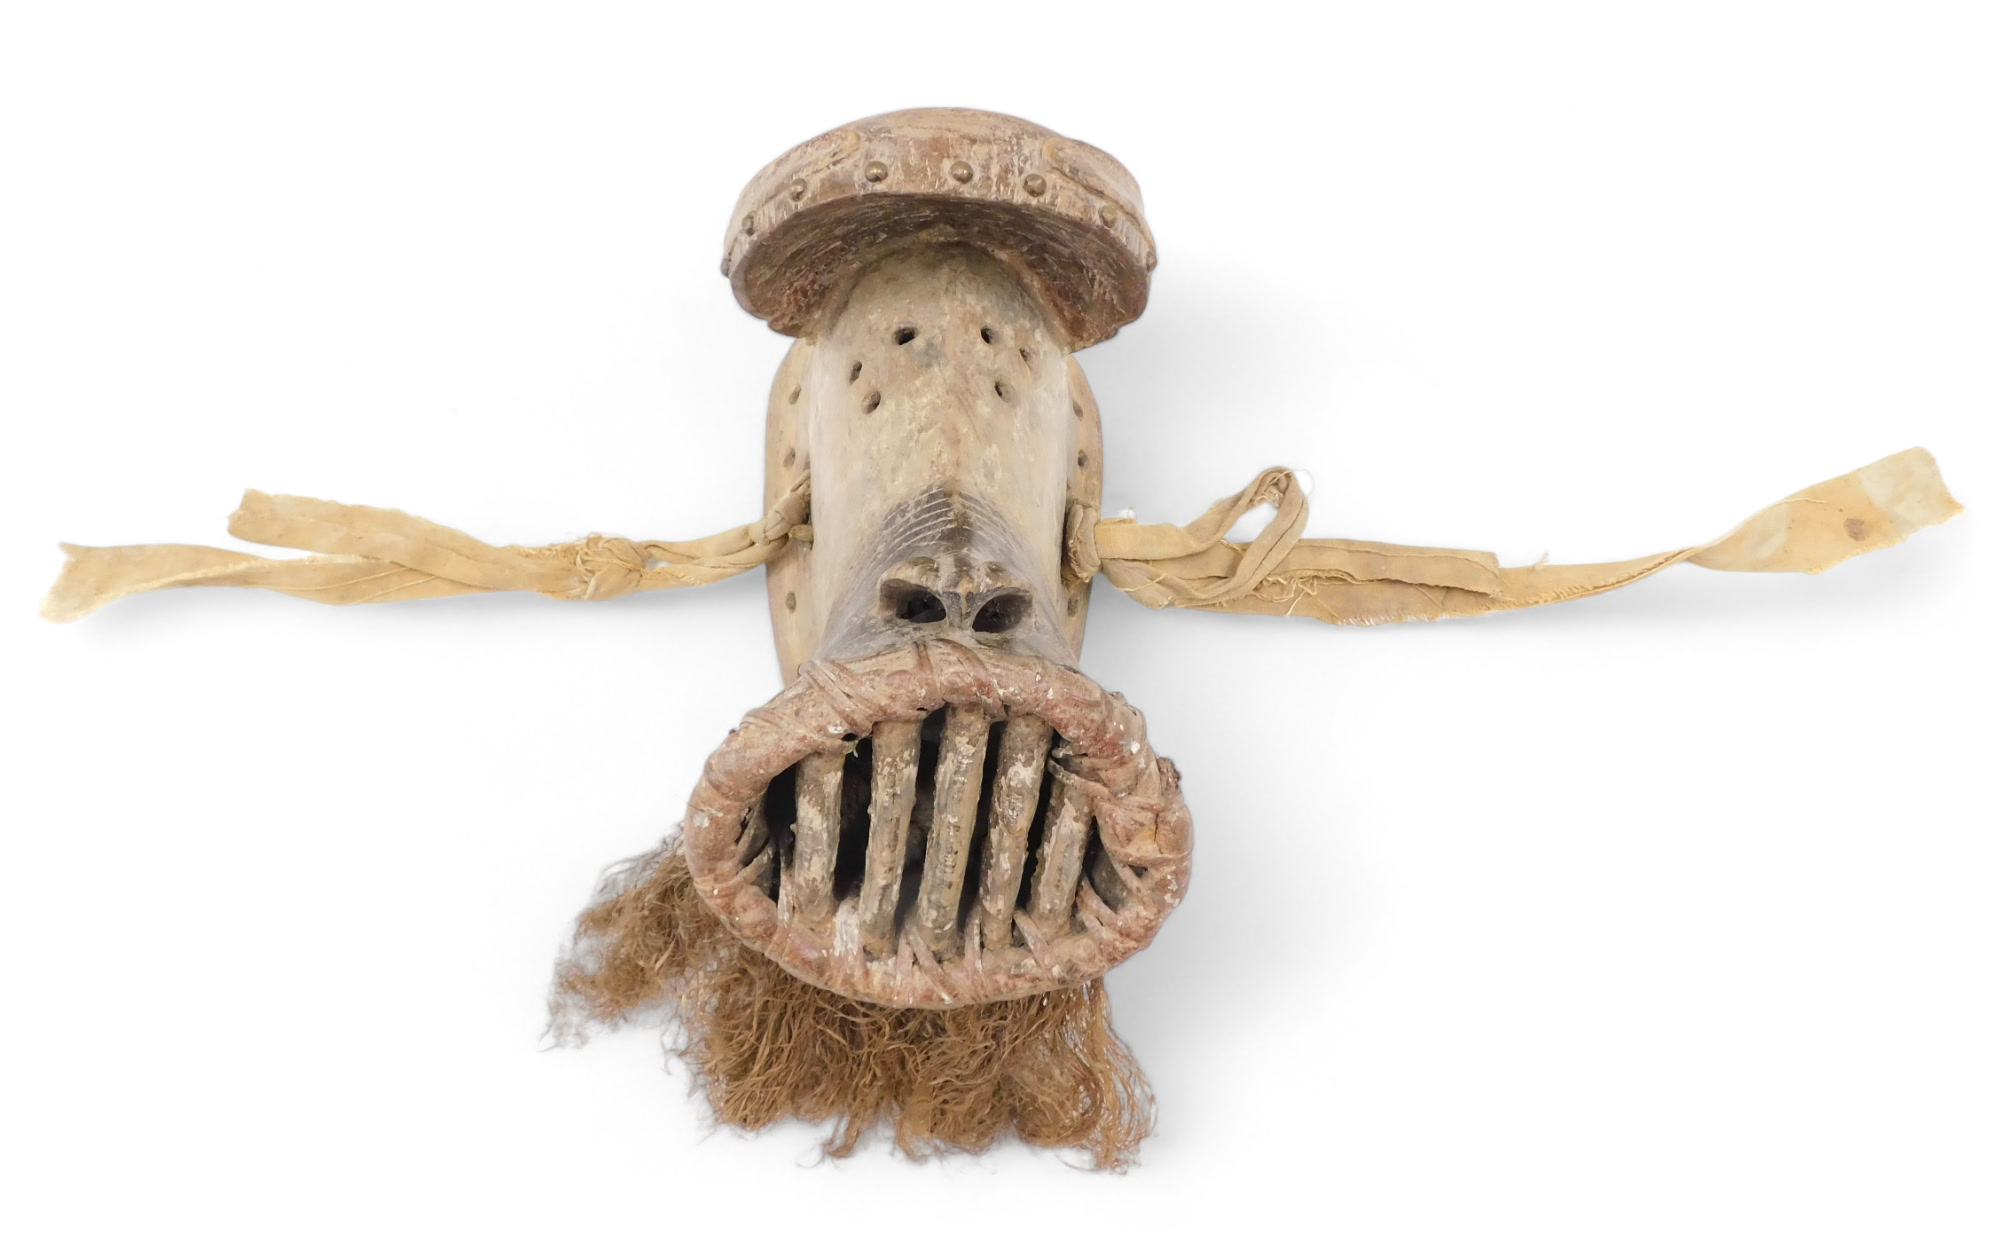 Tribal Art. Kran/Krahn tribe, 'No Speak' mask, collected from village near Zwedru, Liberia, 42cm hig